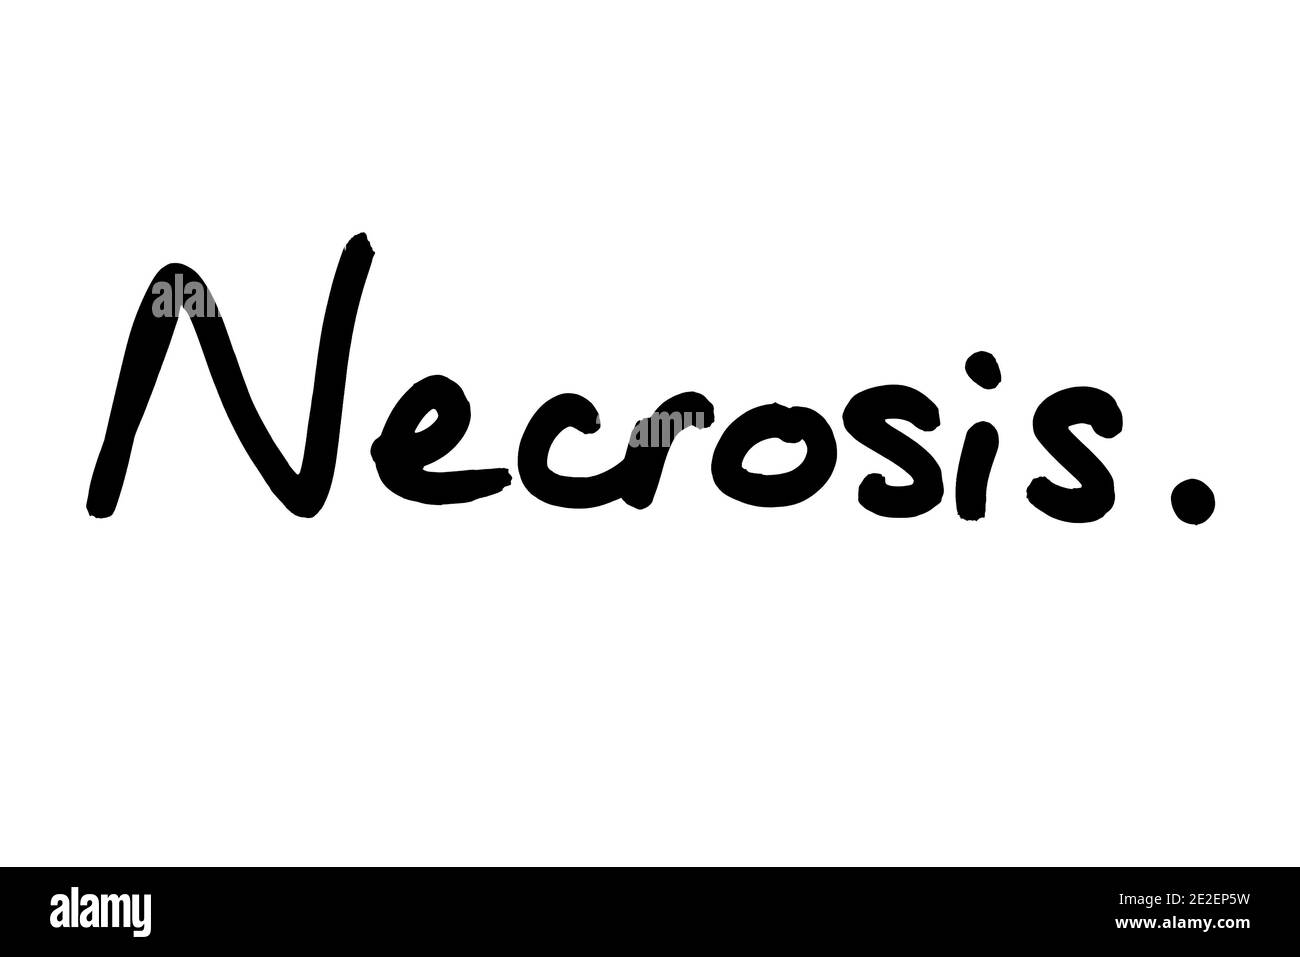 Necrosis, handwritten on a white background. Stock Photo